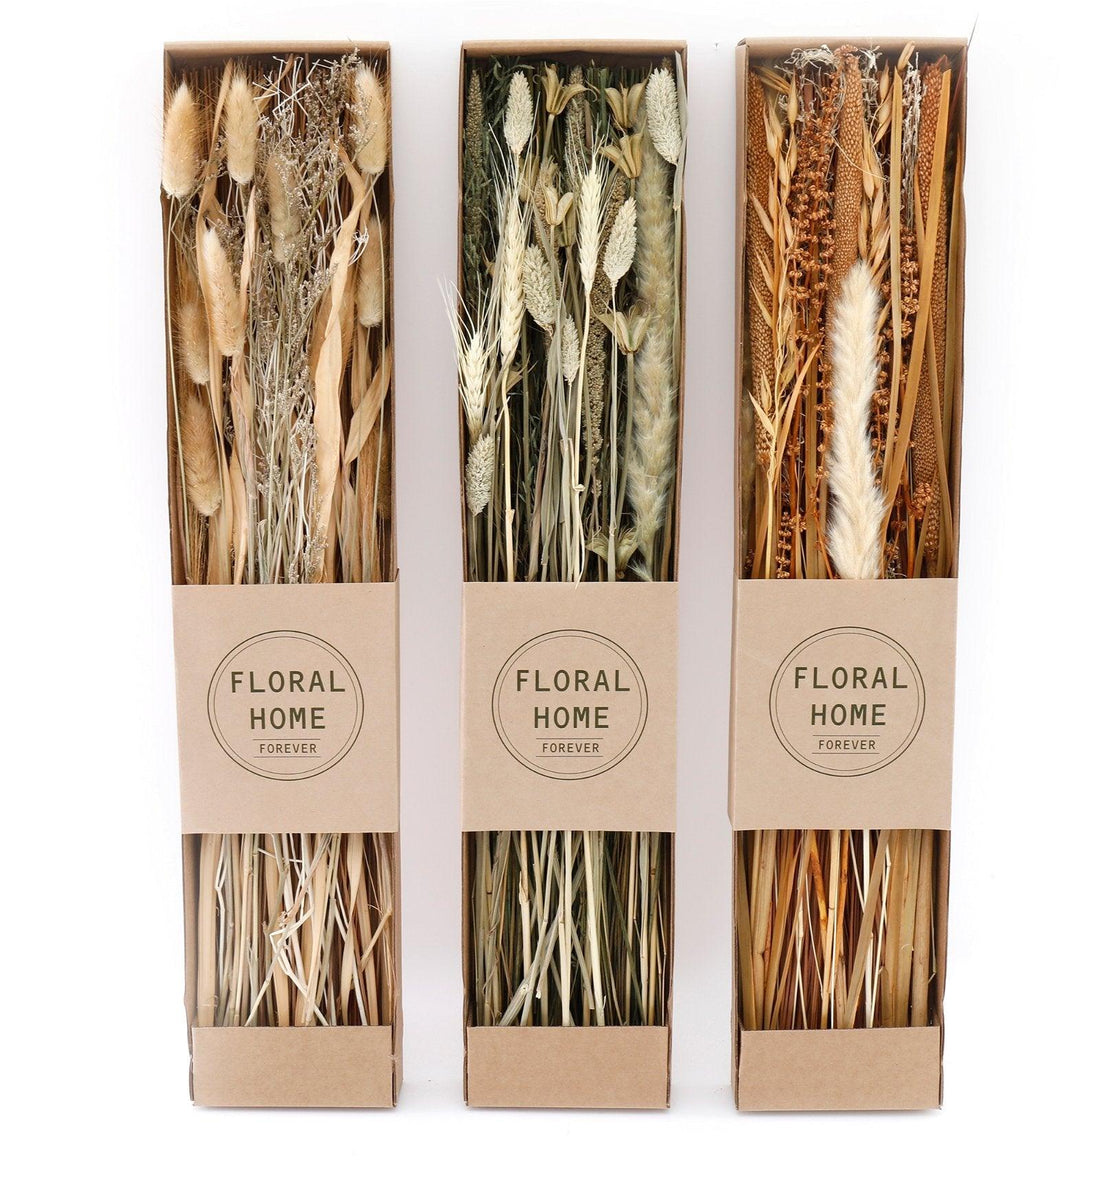 Set of 3 Dried Grasses in Display Box - £49.99 - Flower Sprays 